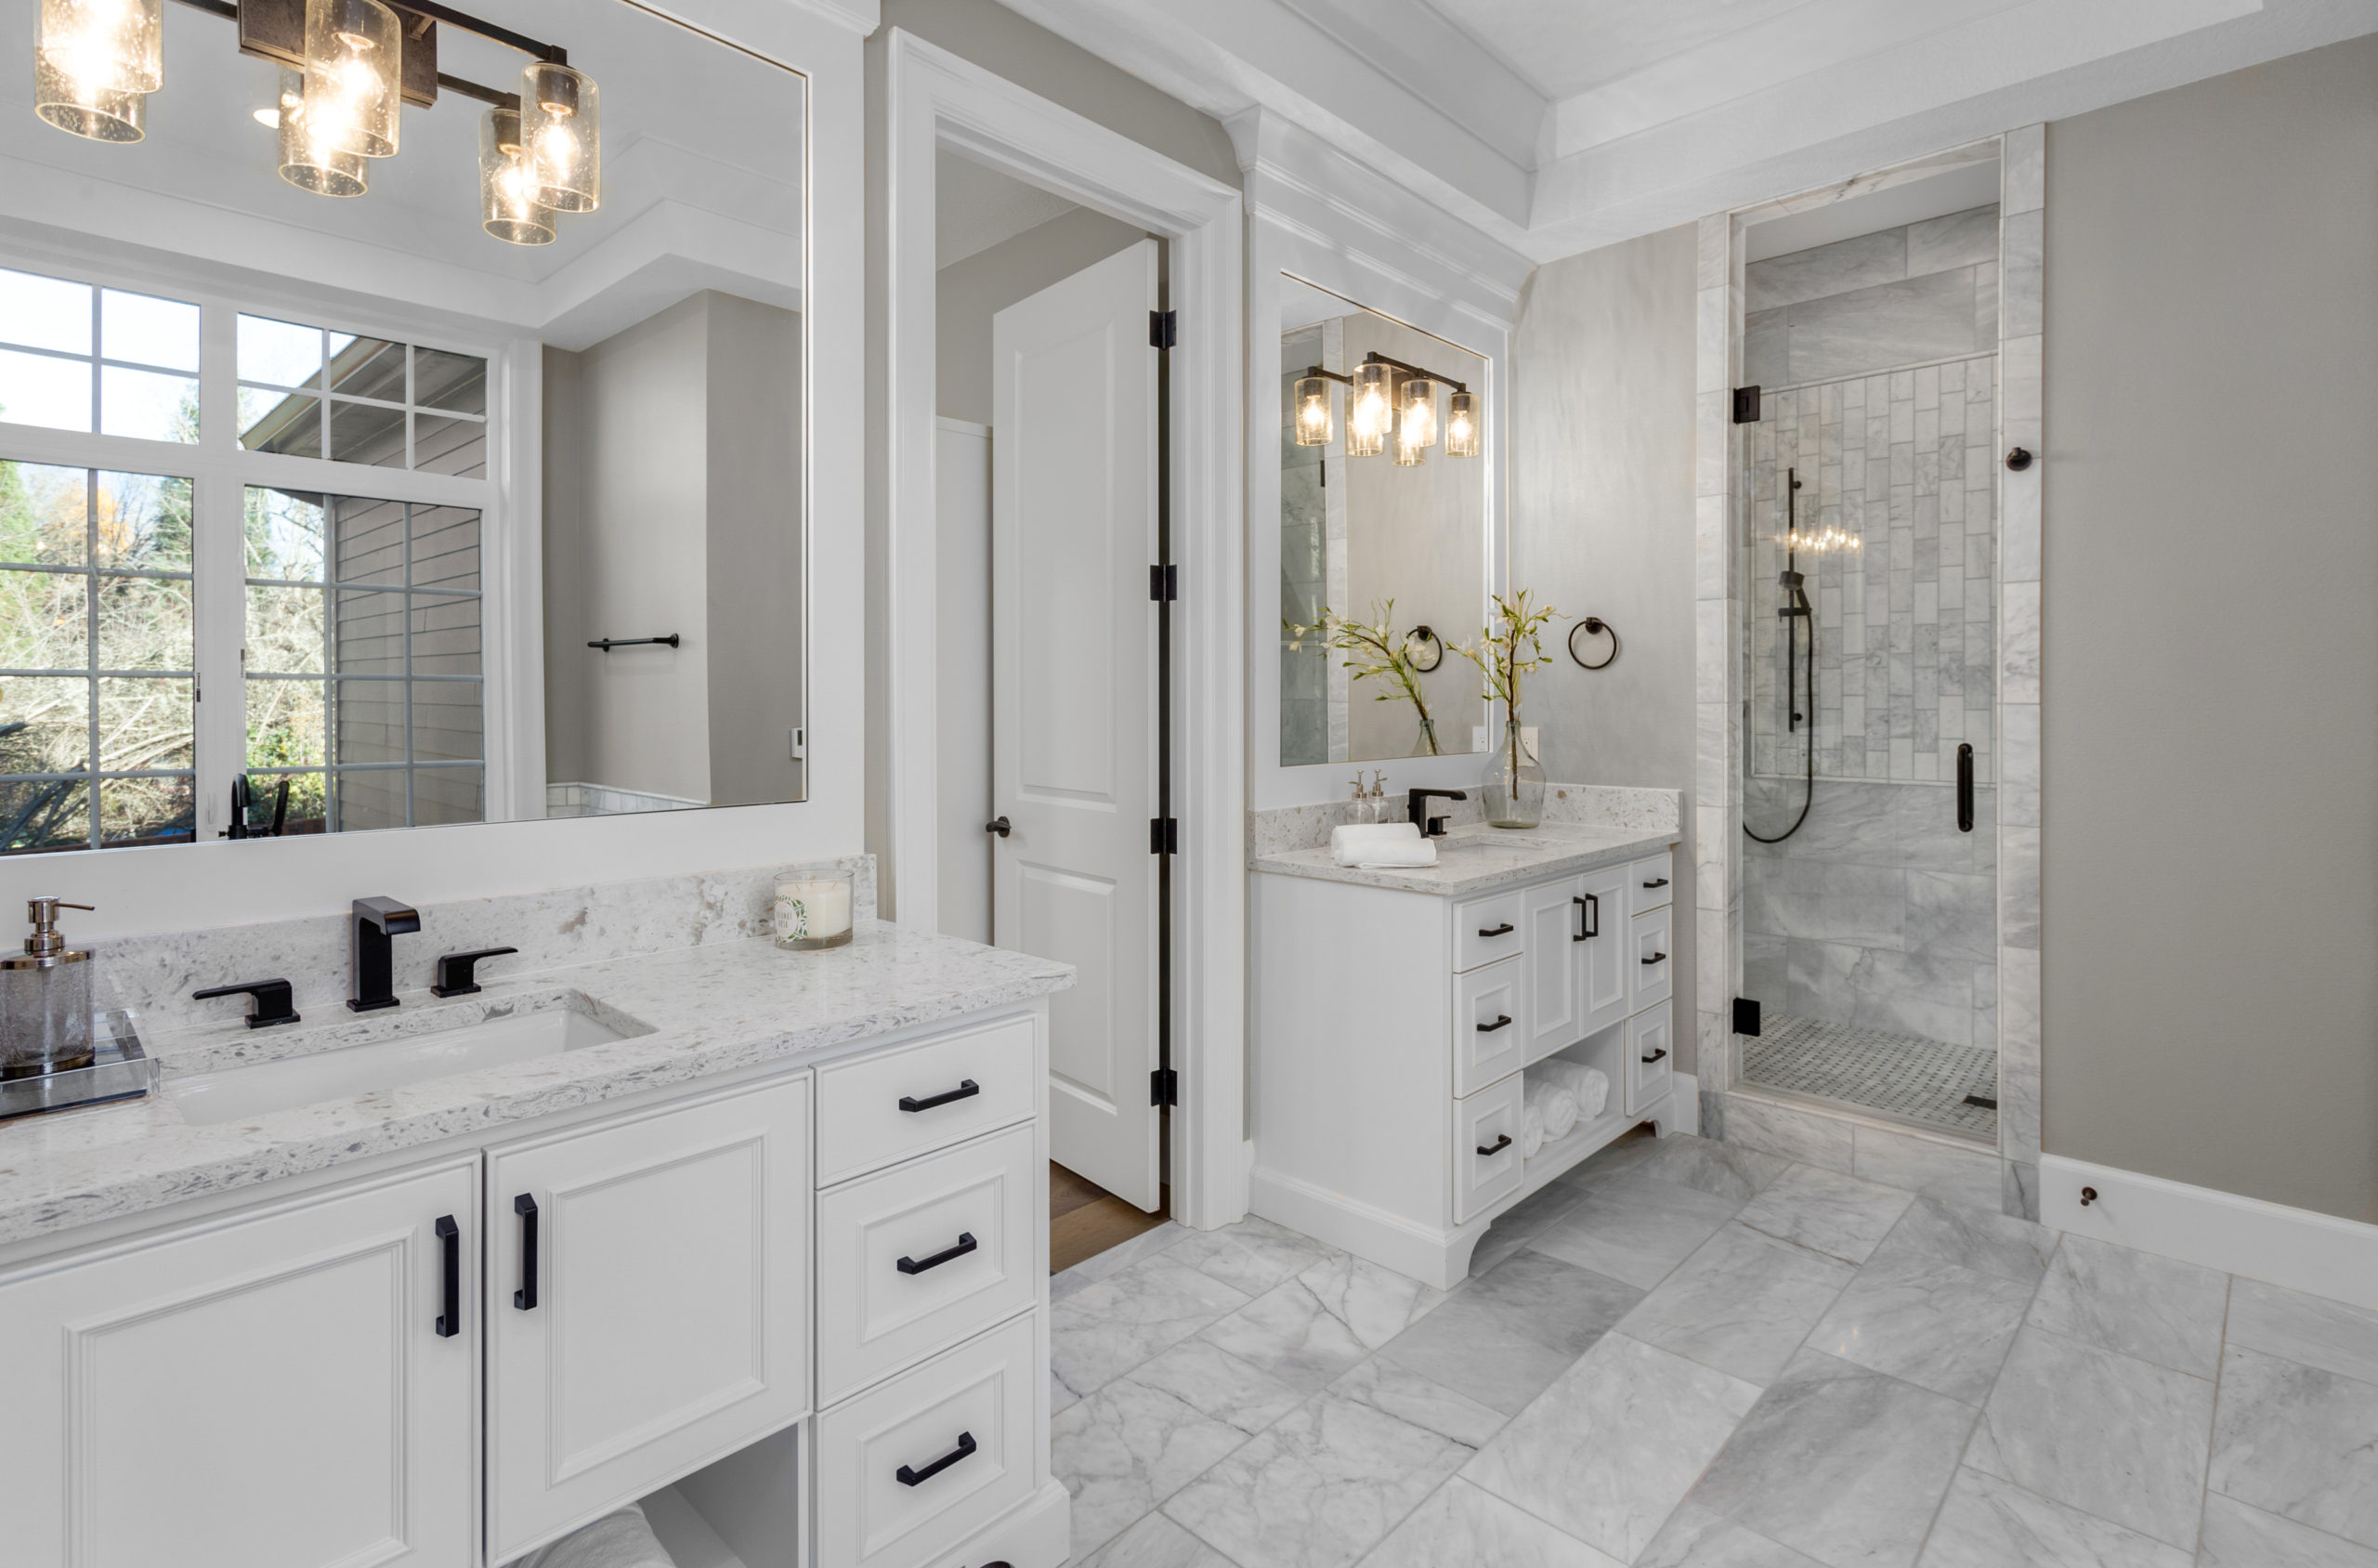 Beautiful bathroom in new luxury home with two vanities, sinks,